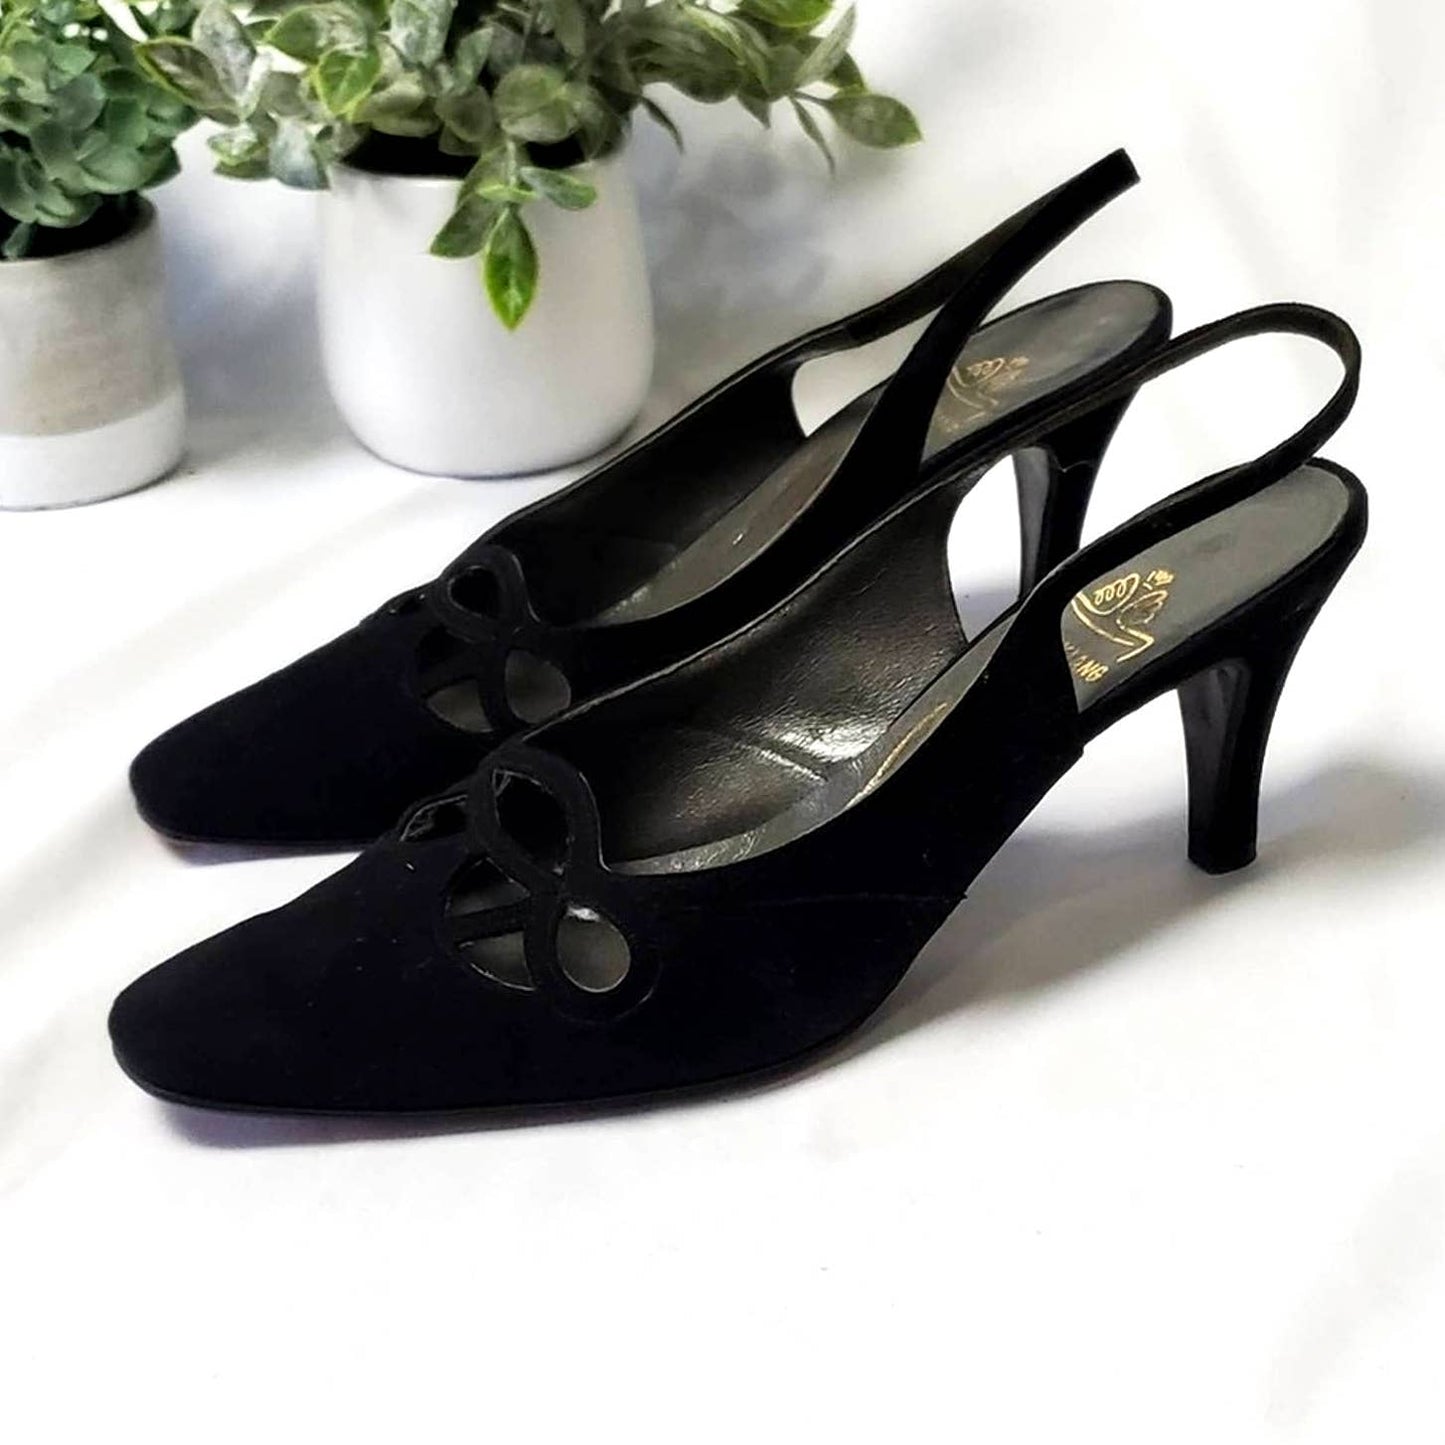 Vintage 1950's Atelier Black Sling Back Heels - 4 1/2